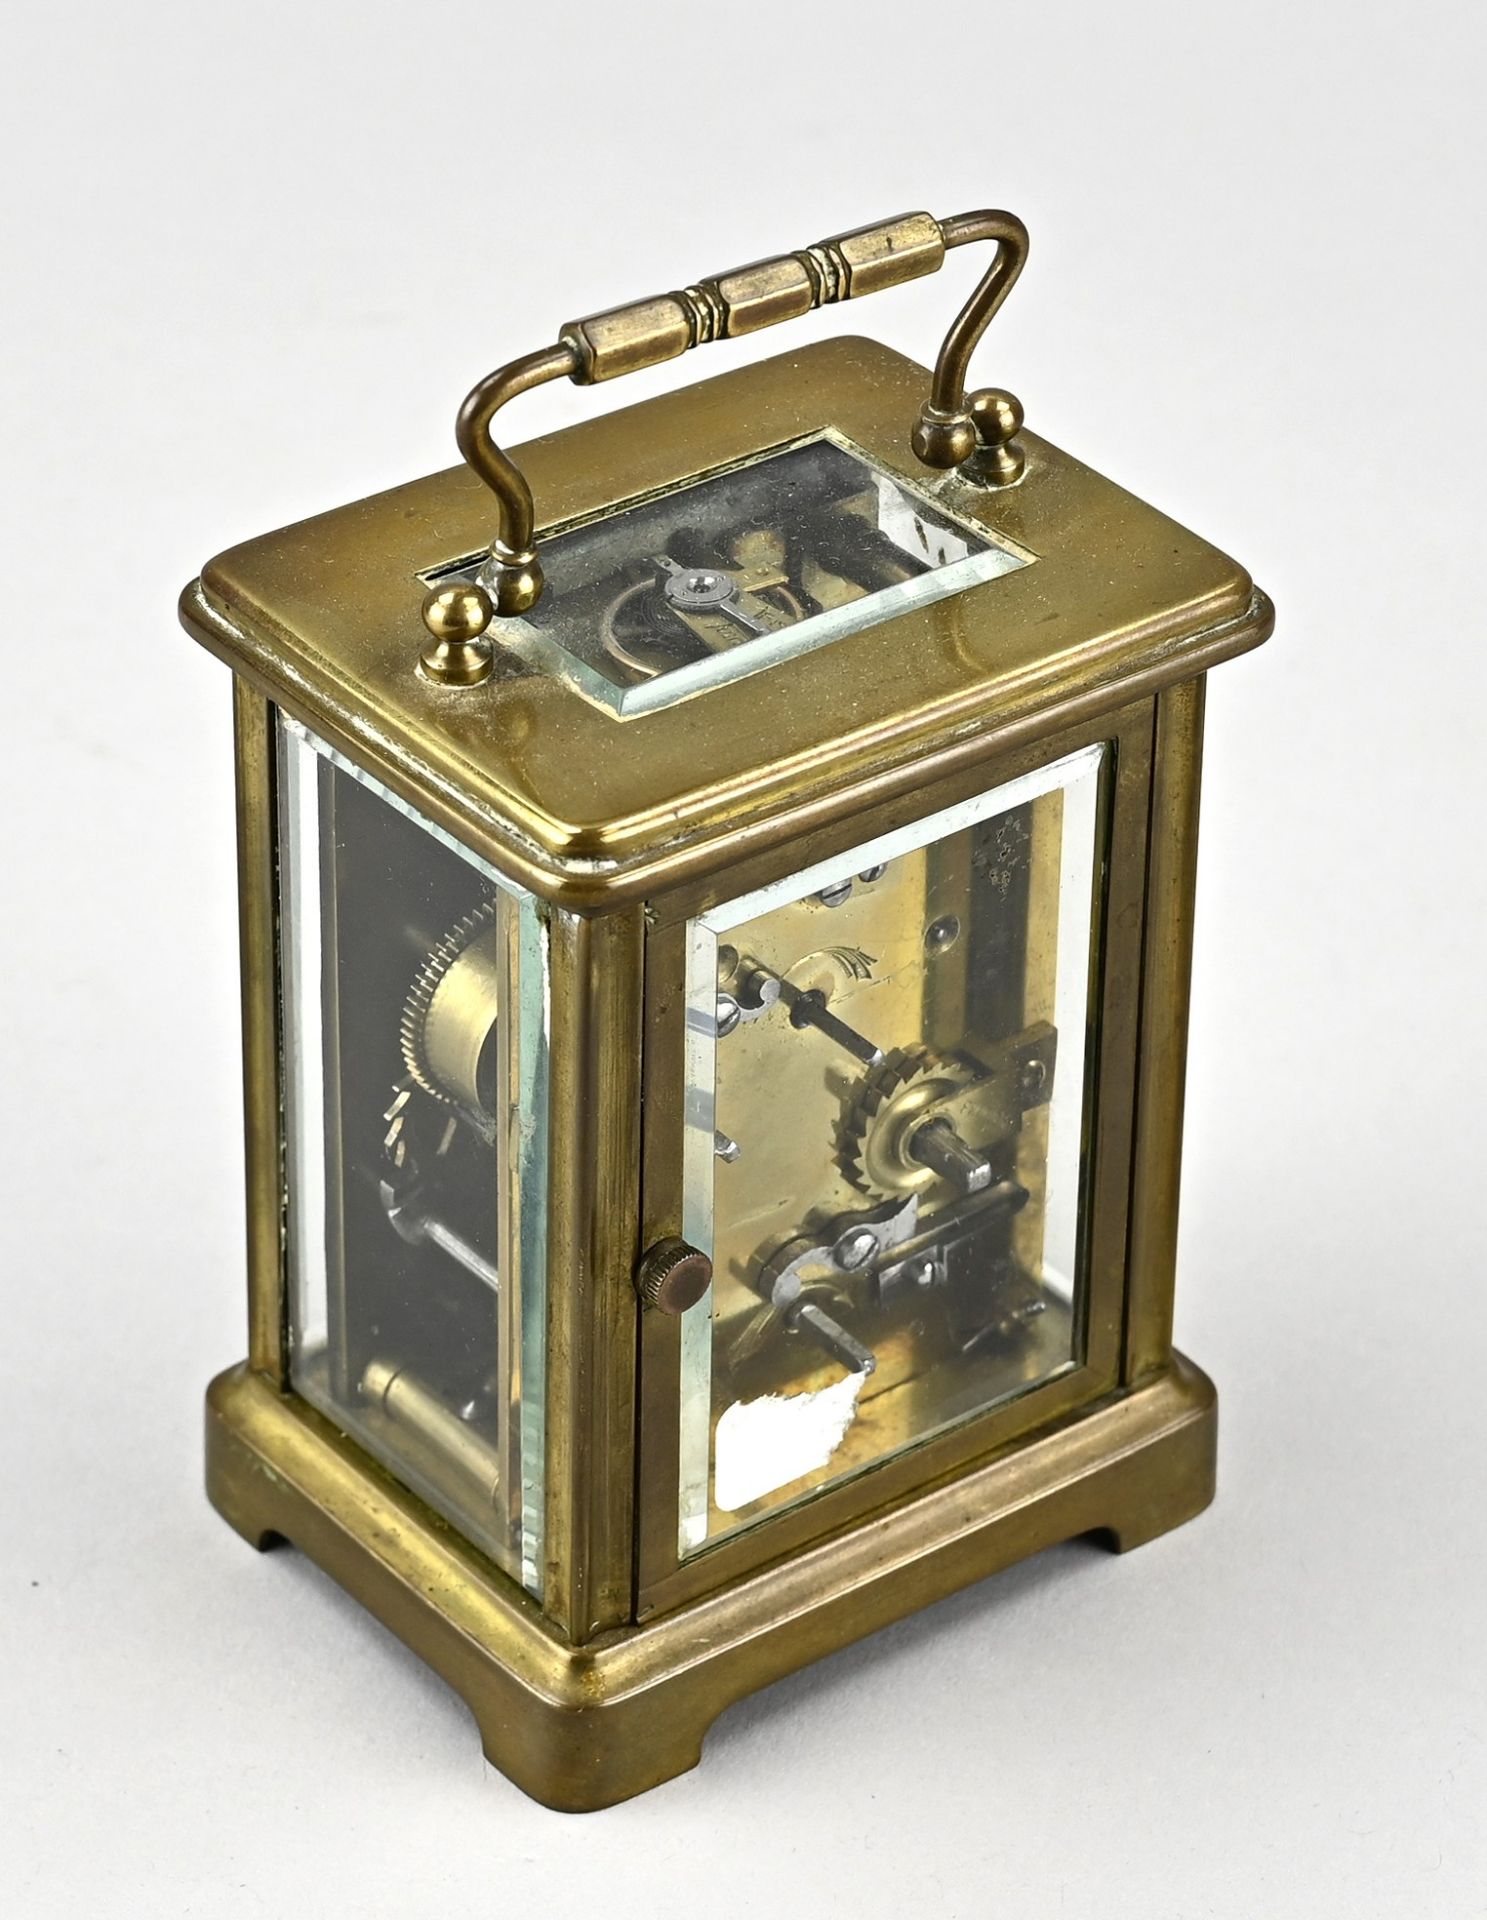 French travel alarm clock, 1900 - Image 2 of 2